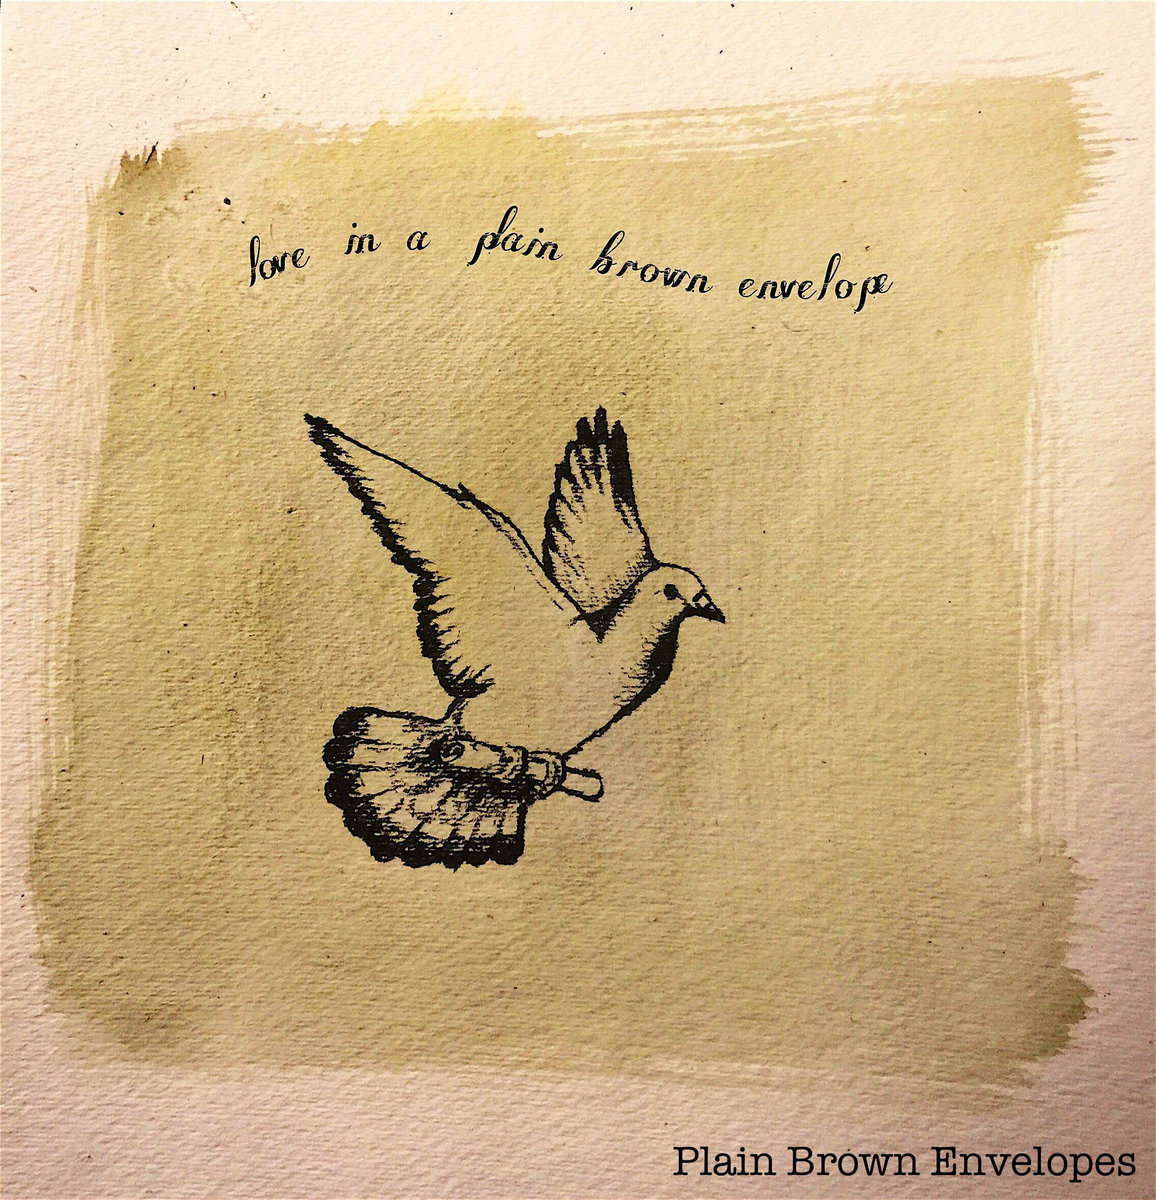 Plain Brown Envelopes – Love In A Plain Brown Envelope